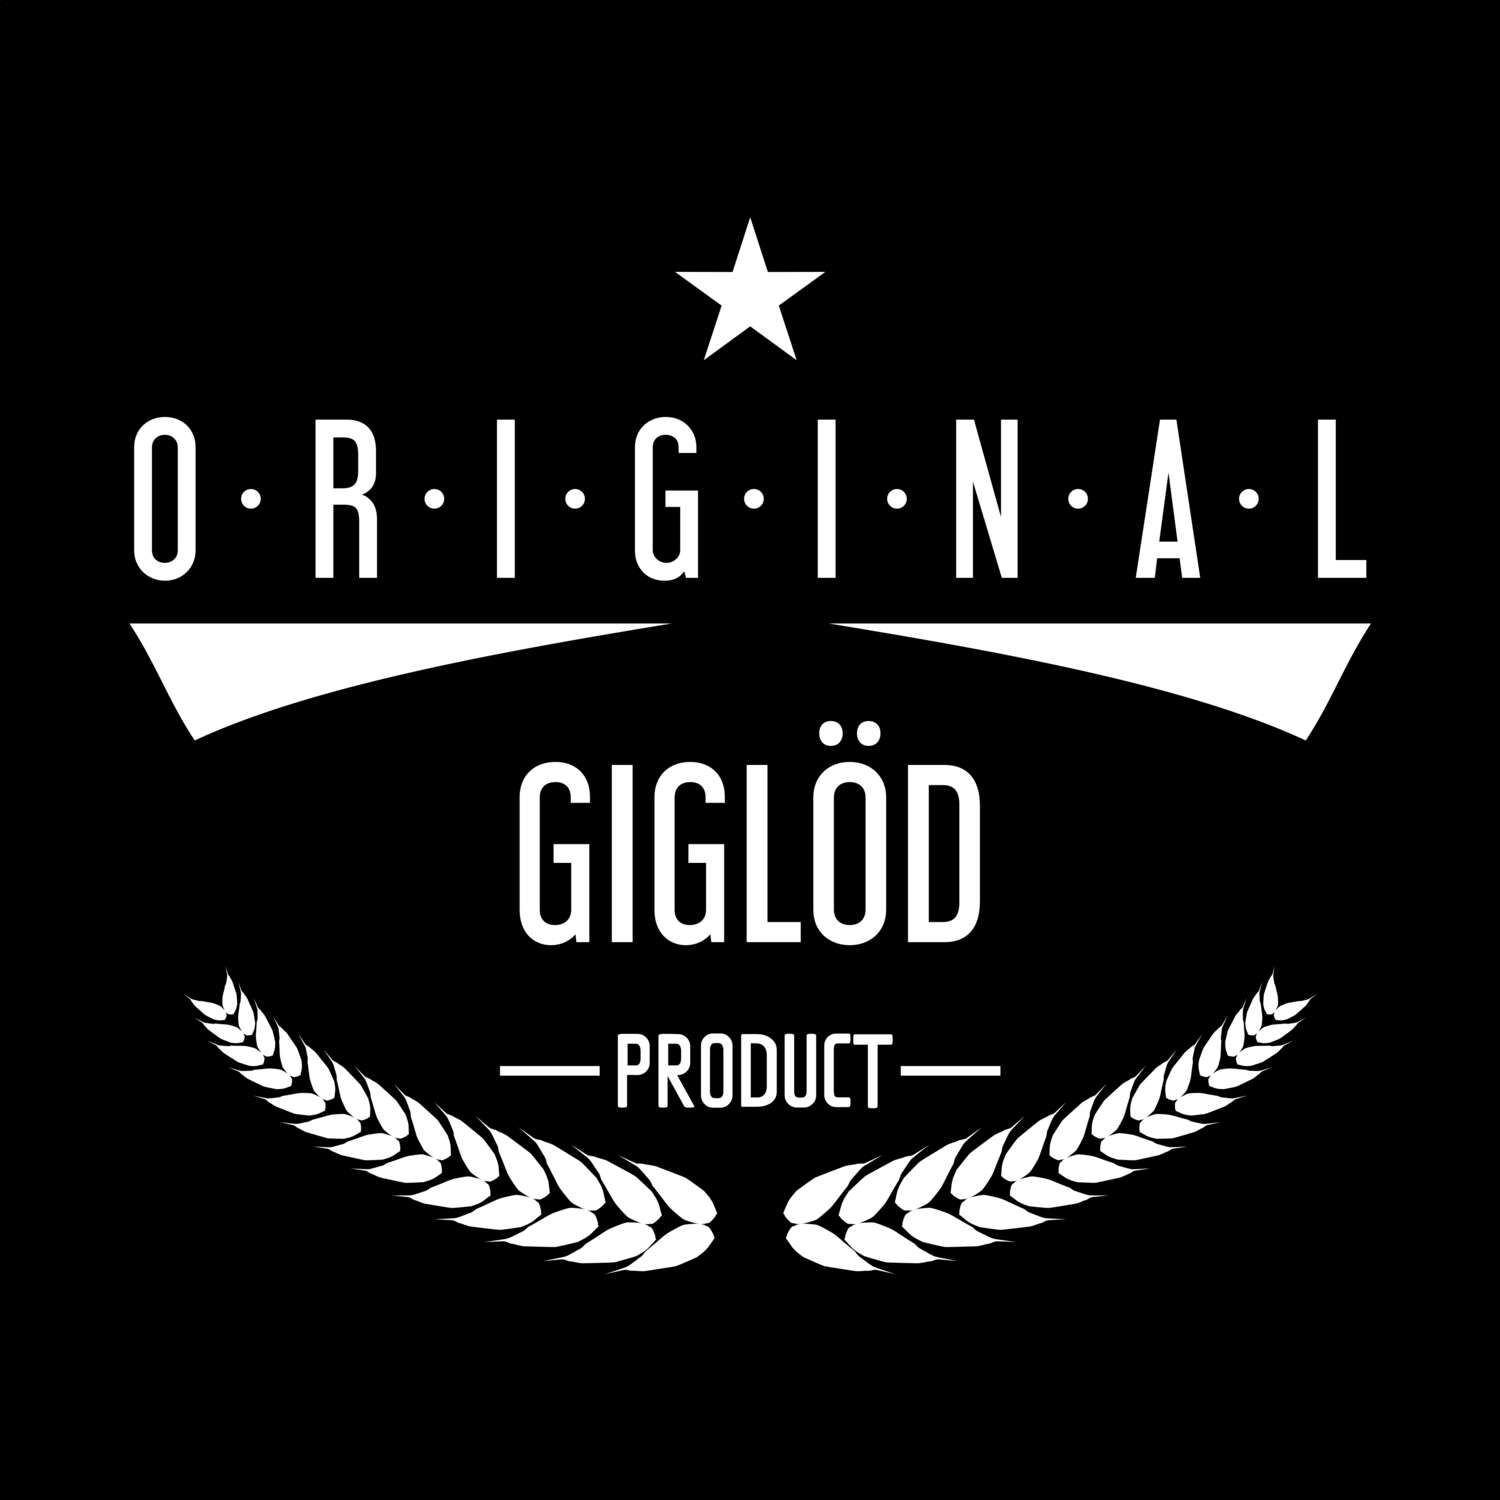 Giglöd T-Shirt »Original Product«